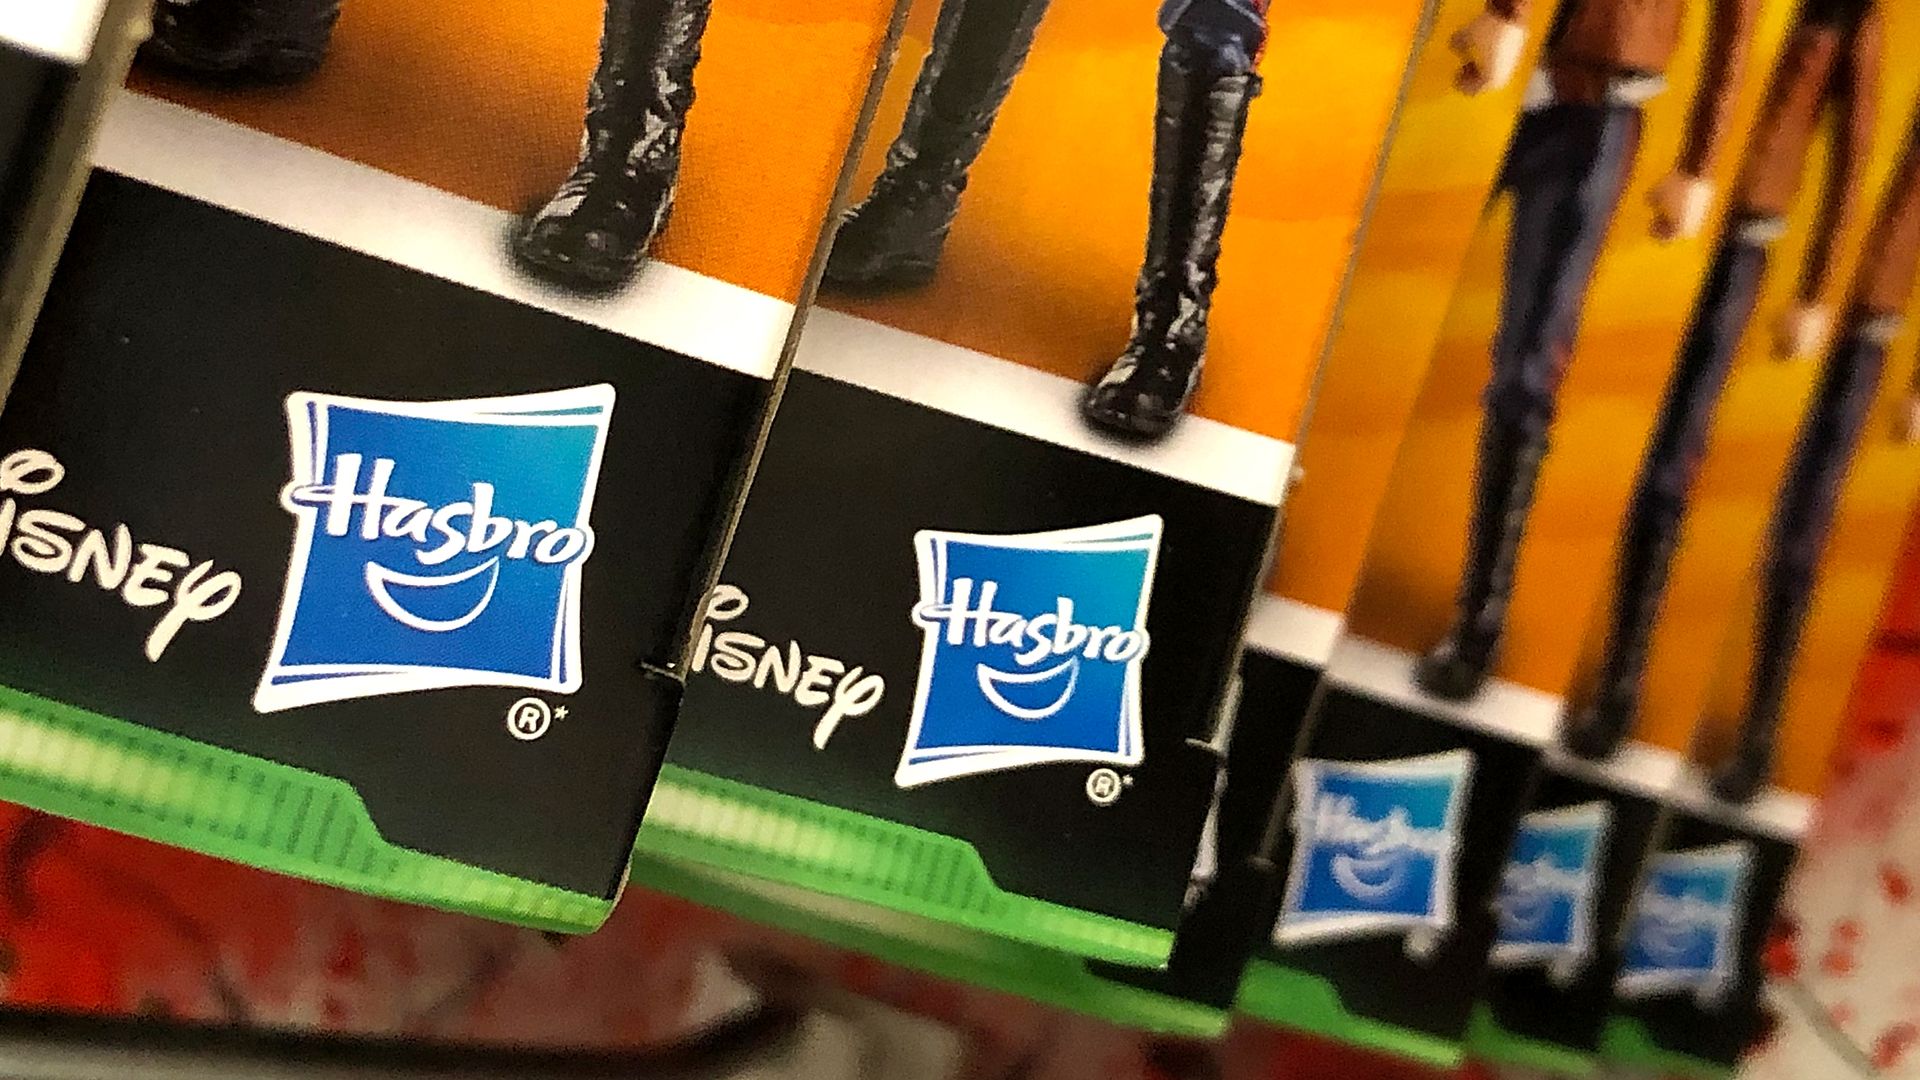 Hasbro to cut 1,100 jobs despite Dungeons & Dragons thriving